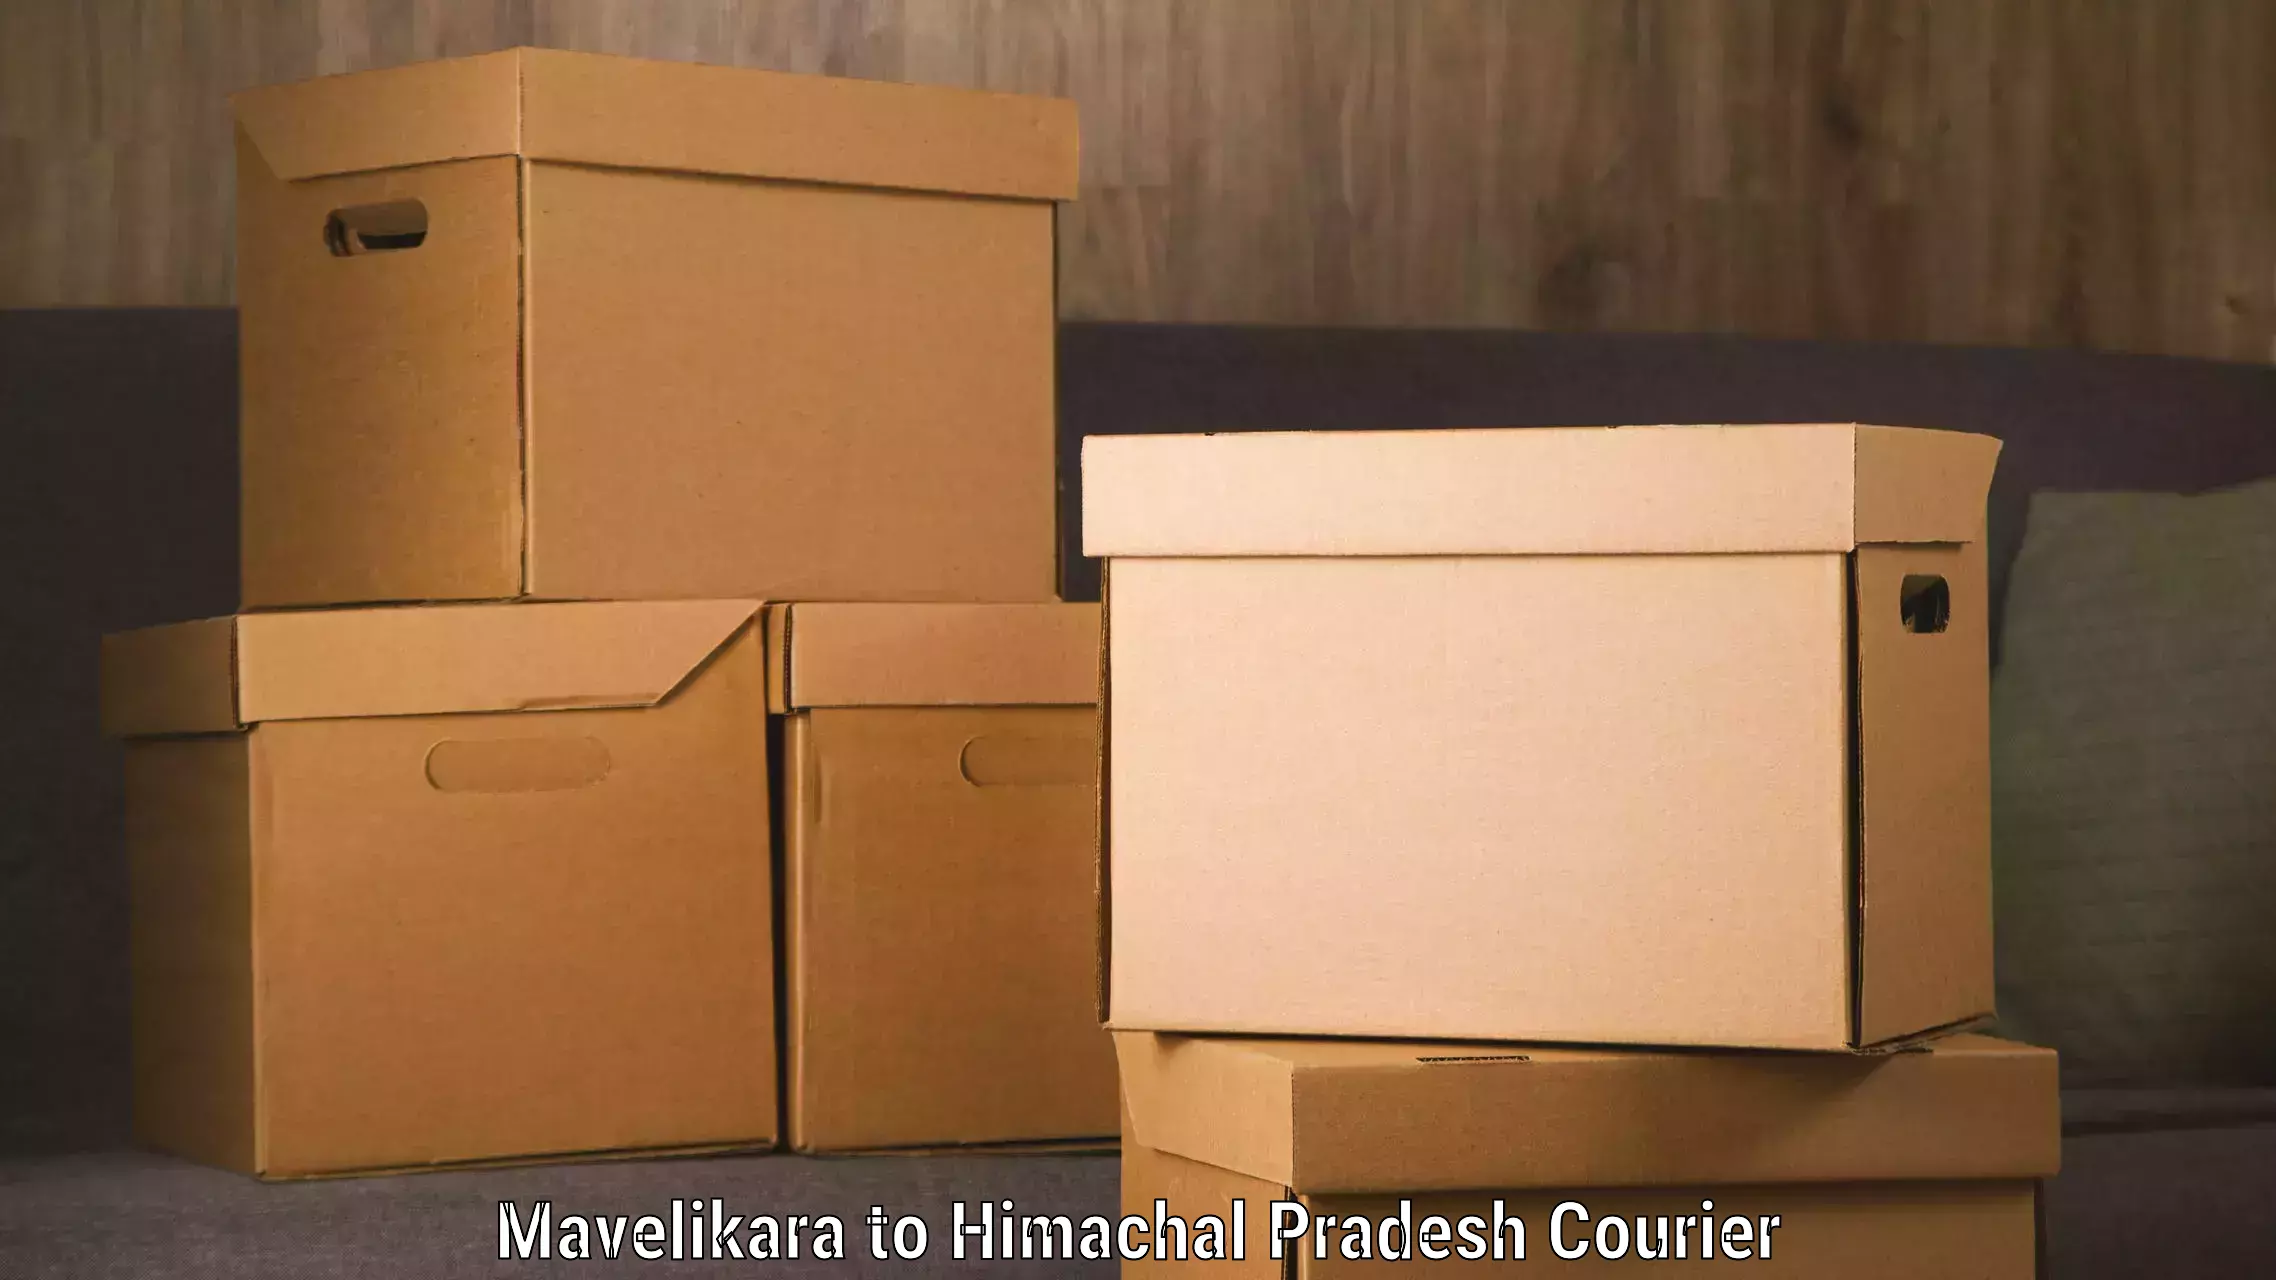 Enhanced tracking features Mavelikara to Himachal Pradesh